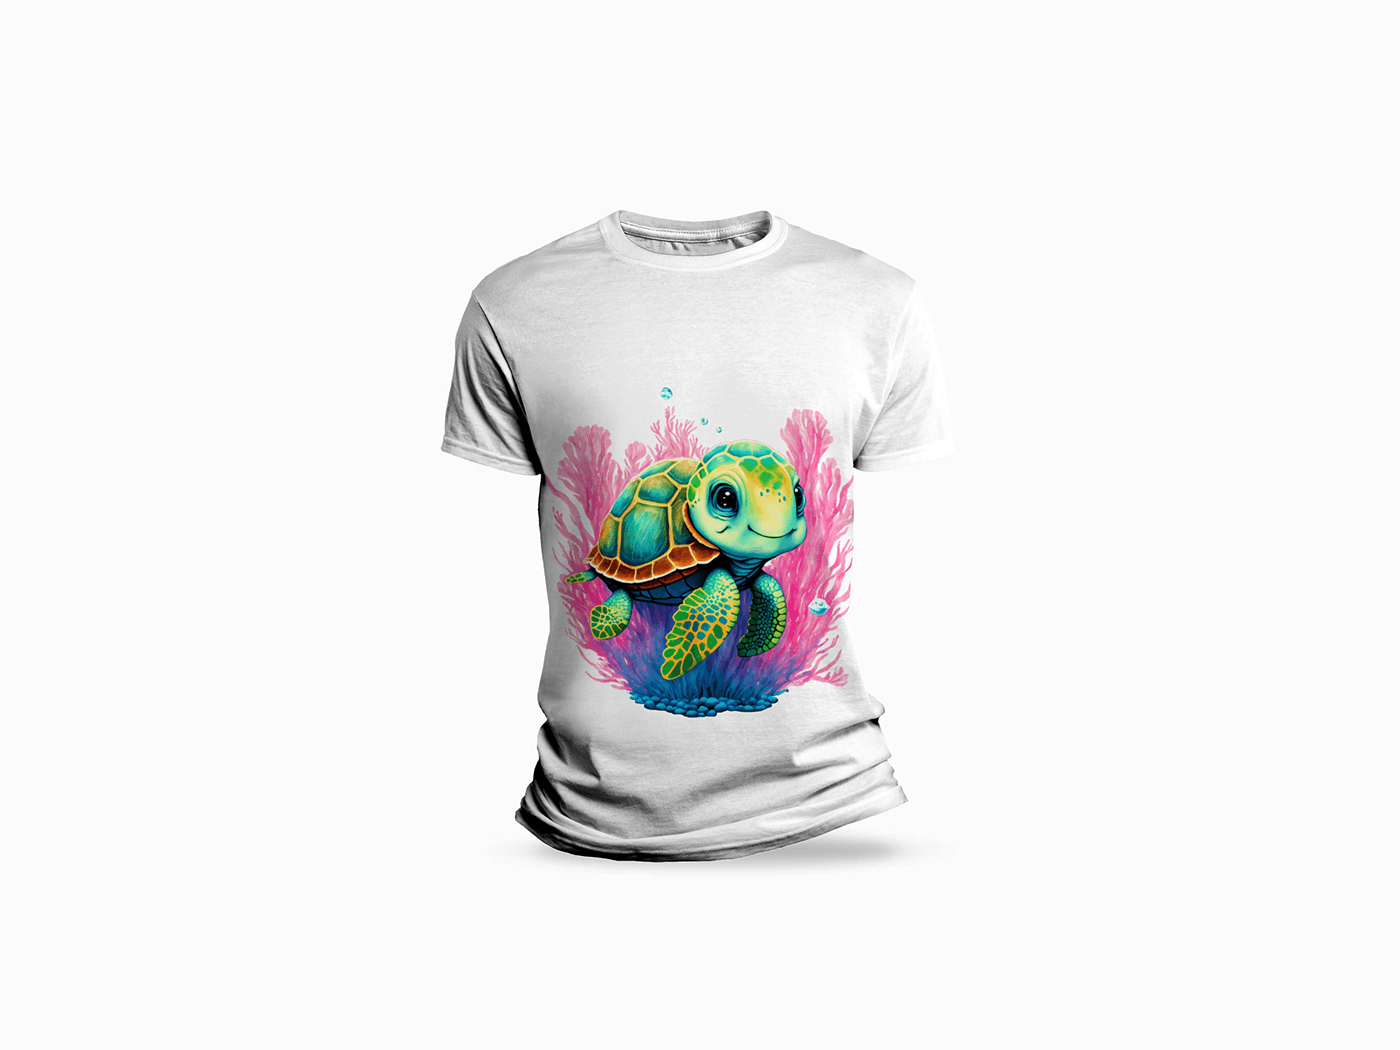 Mockup design ideas t-shirt Clothing design adobe illustrator Graphic Designer round tshirt